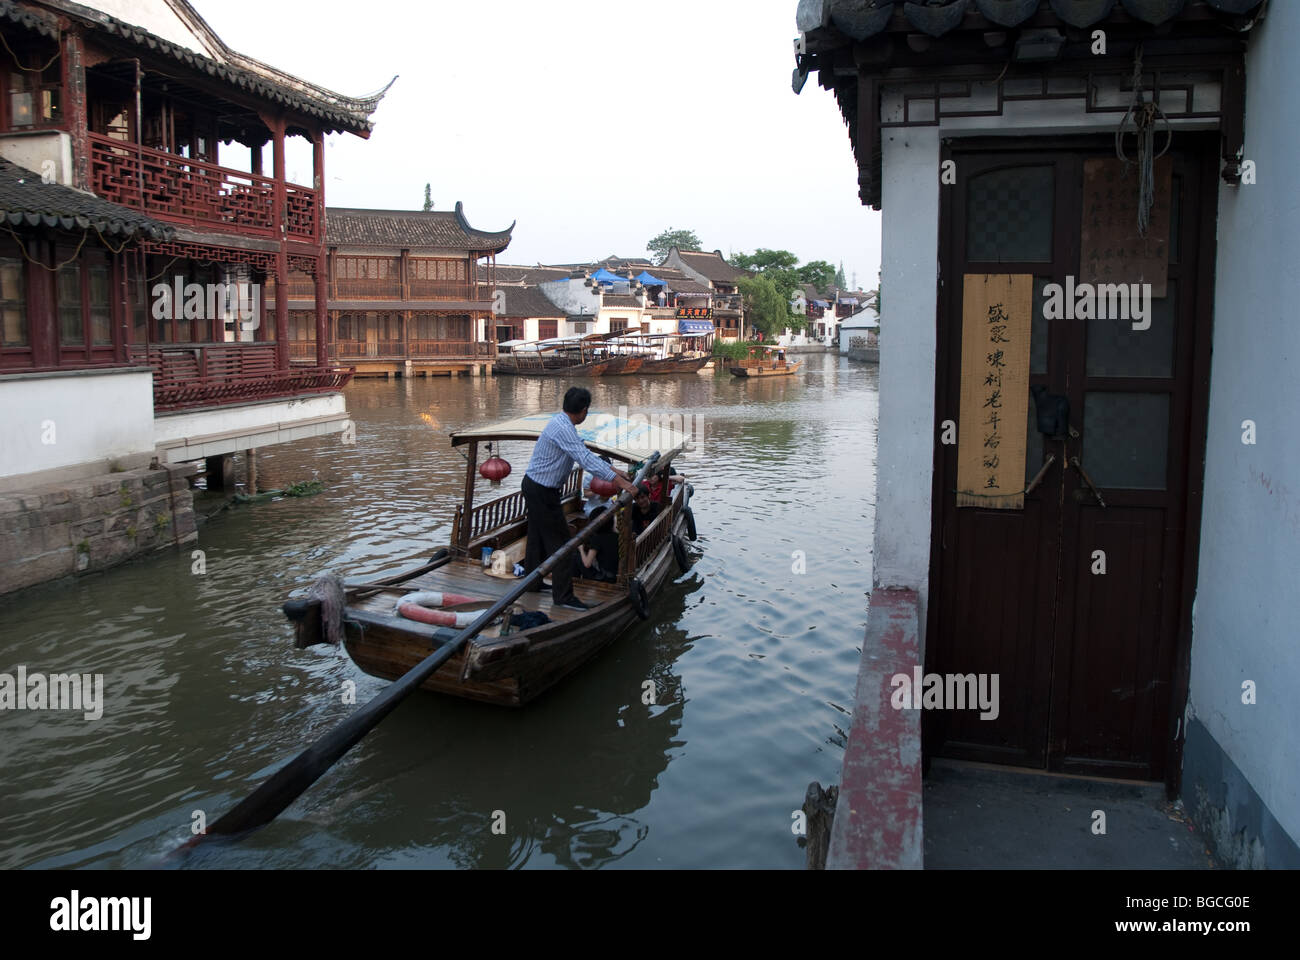 A boatman rows in the canal looking for tourists, Zhujiajiao, China Stock Photo